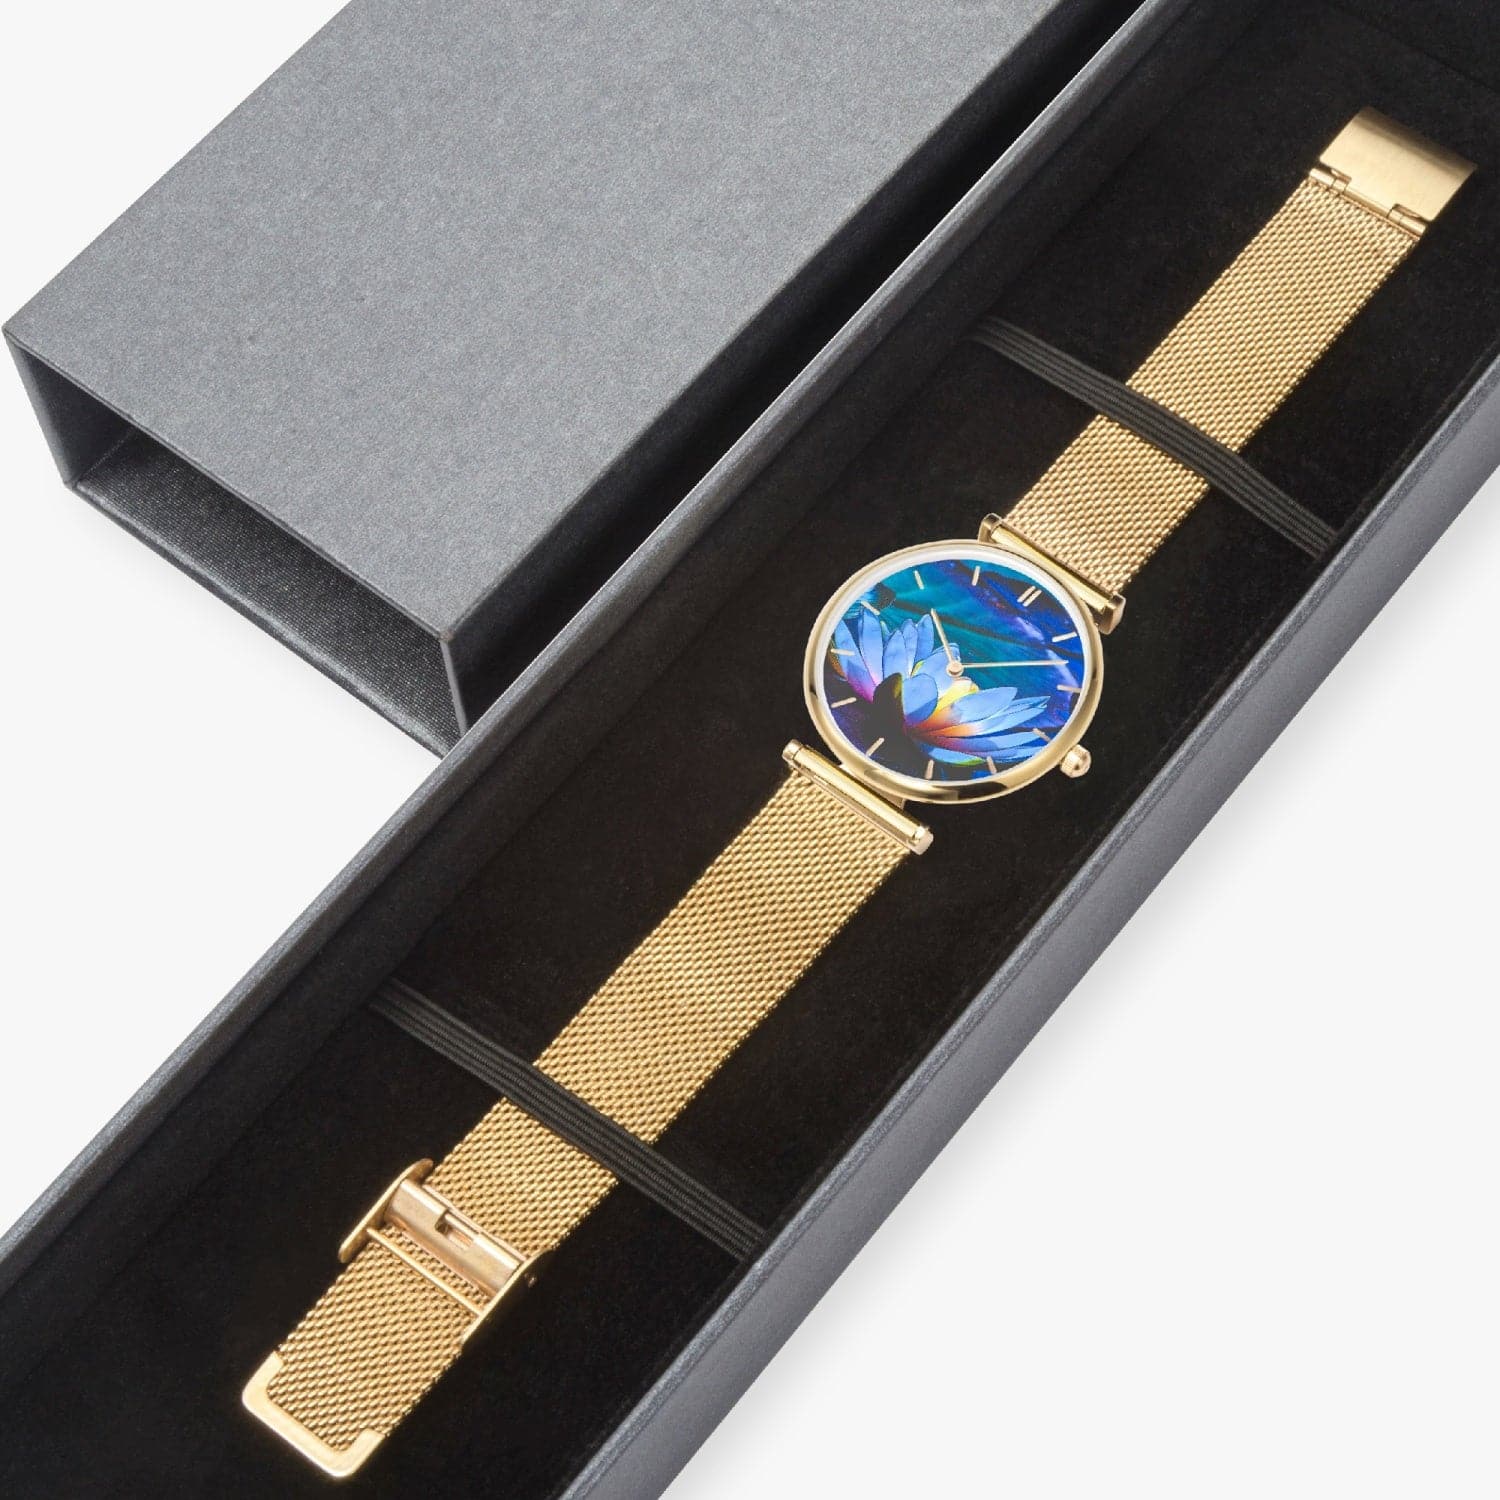 Blue Lily, New Stylish Ultra-Thin Quartz Watch (With Indicators), by Sensus Studio